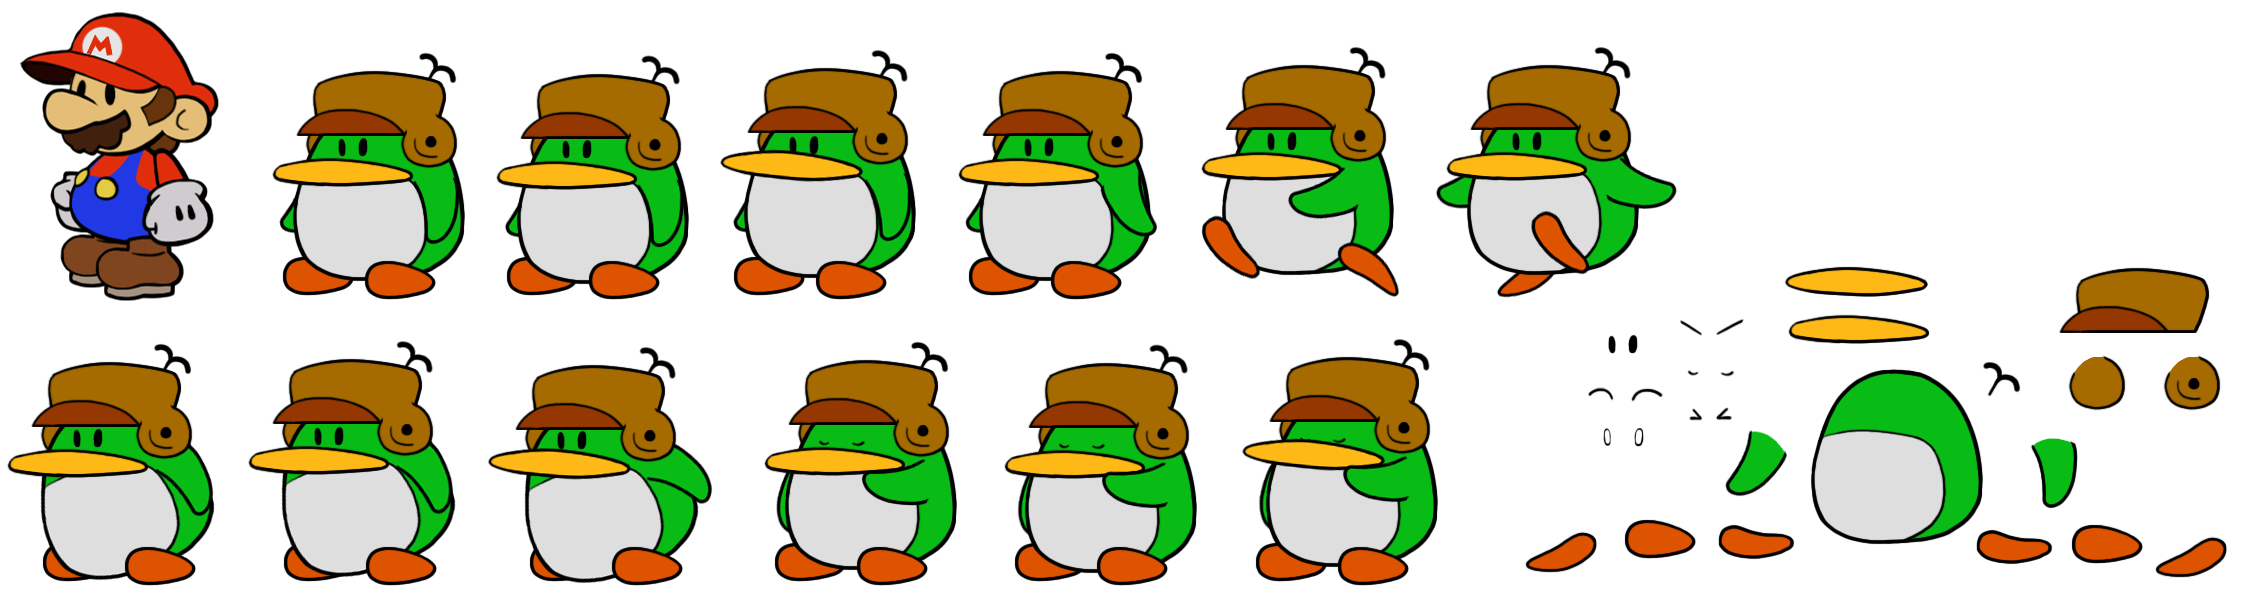 Penguin Patrol (Paper Mario-Style)